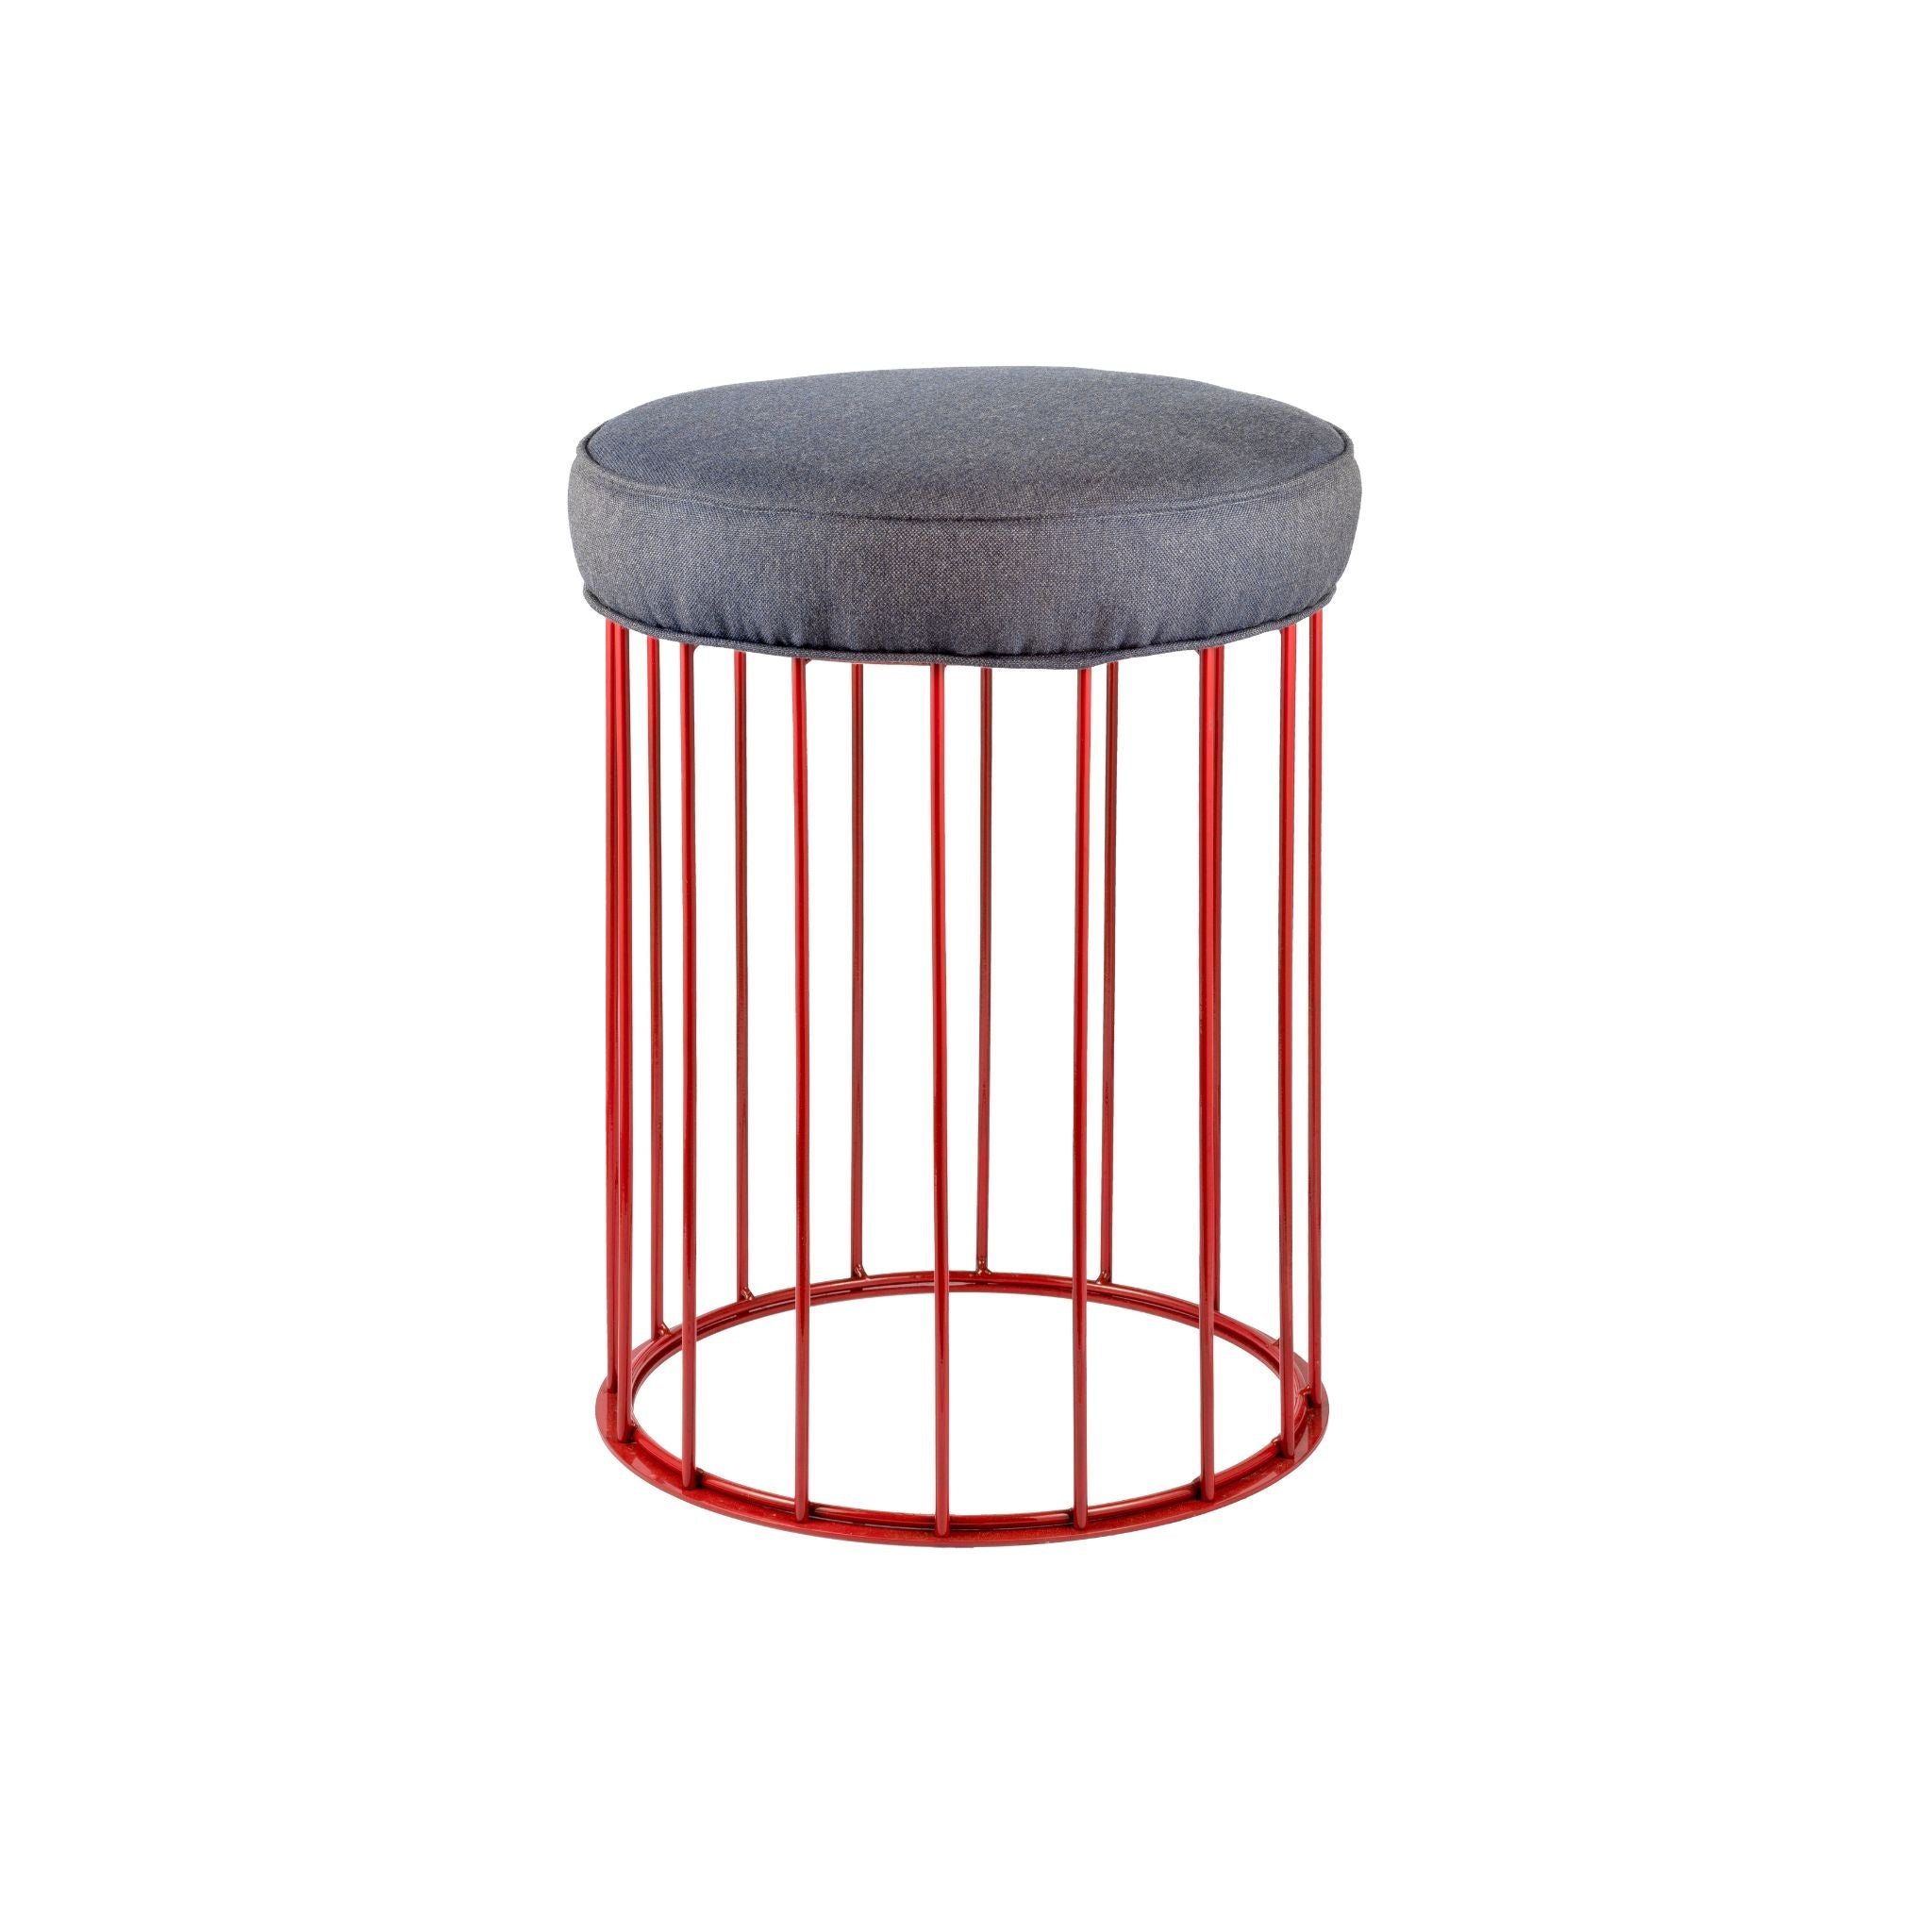 Cage carmine red iron stool - ilbronzetto